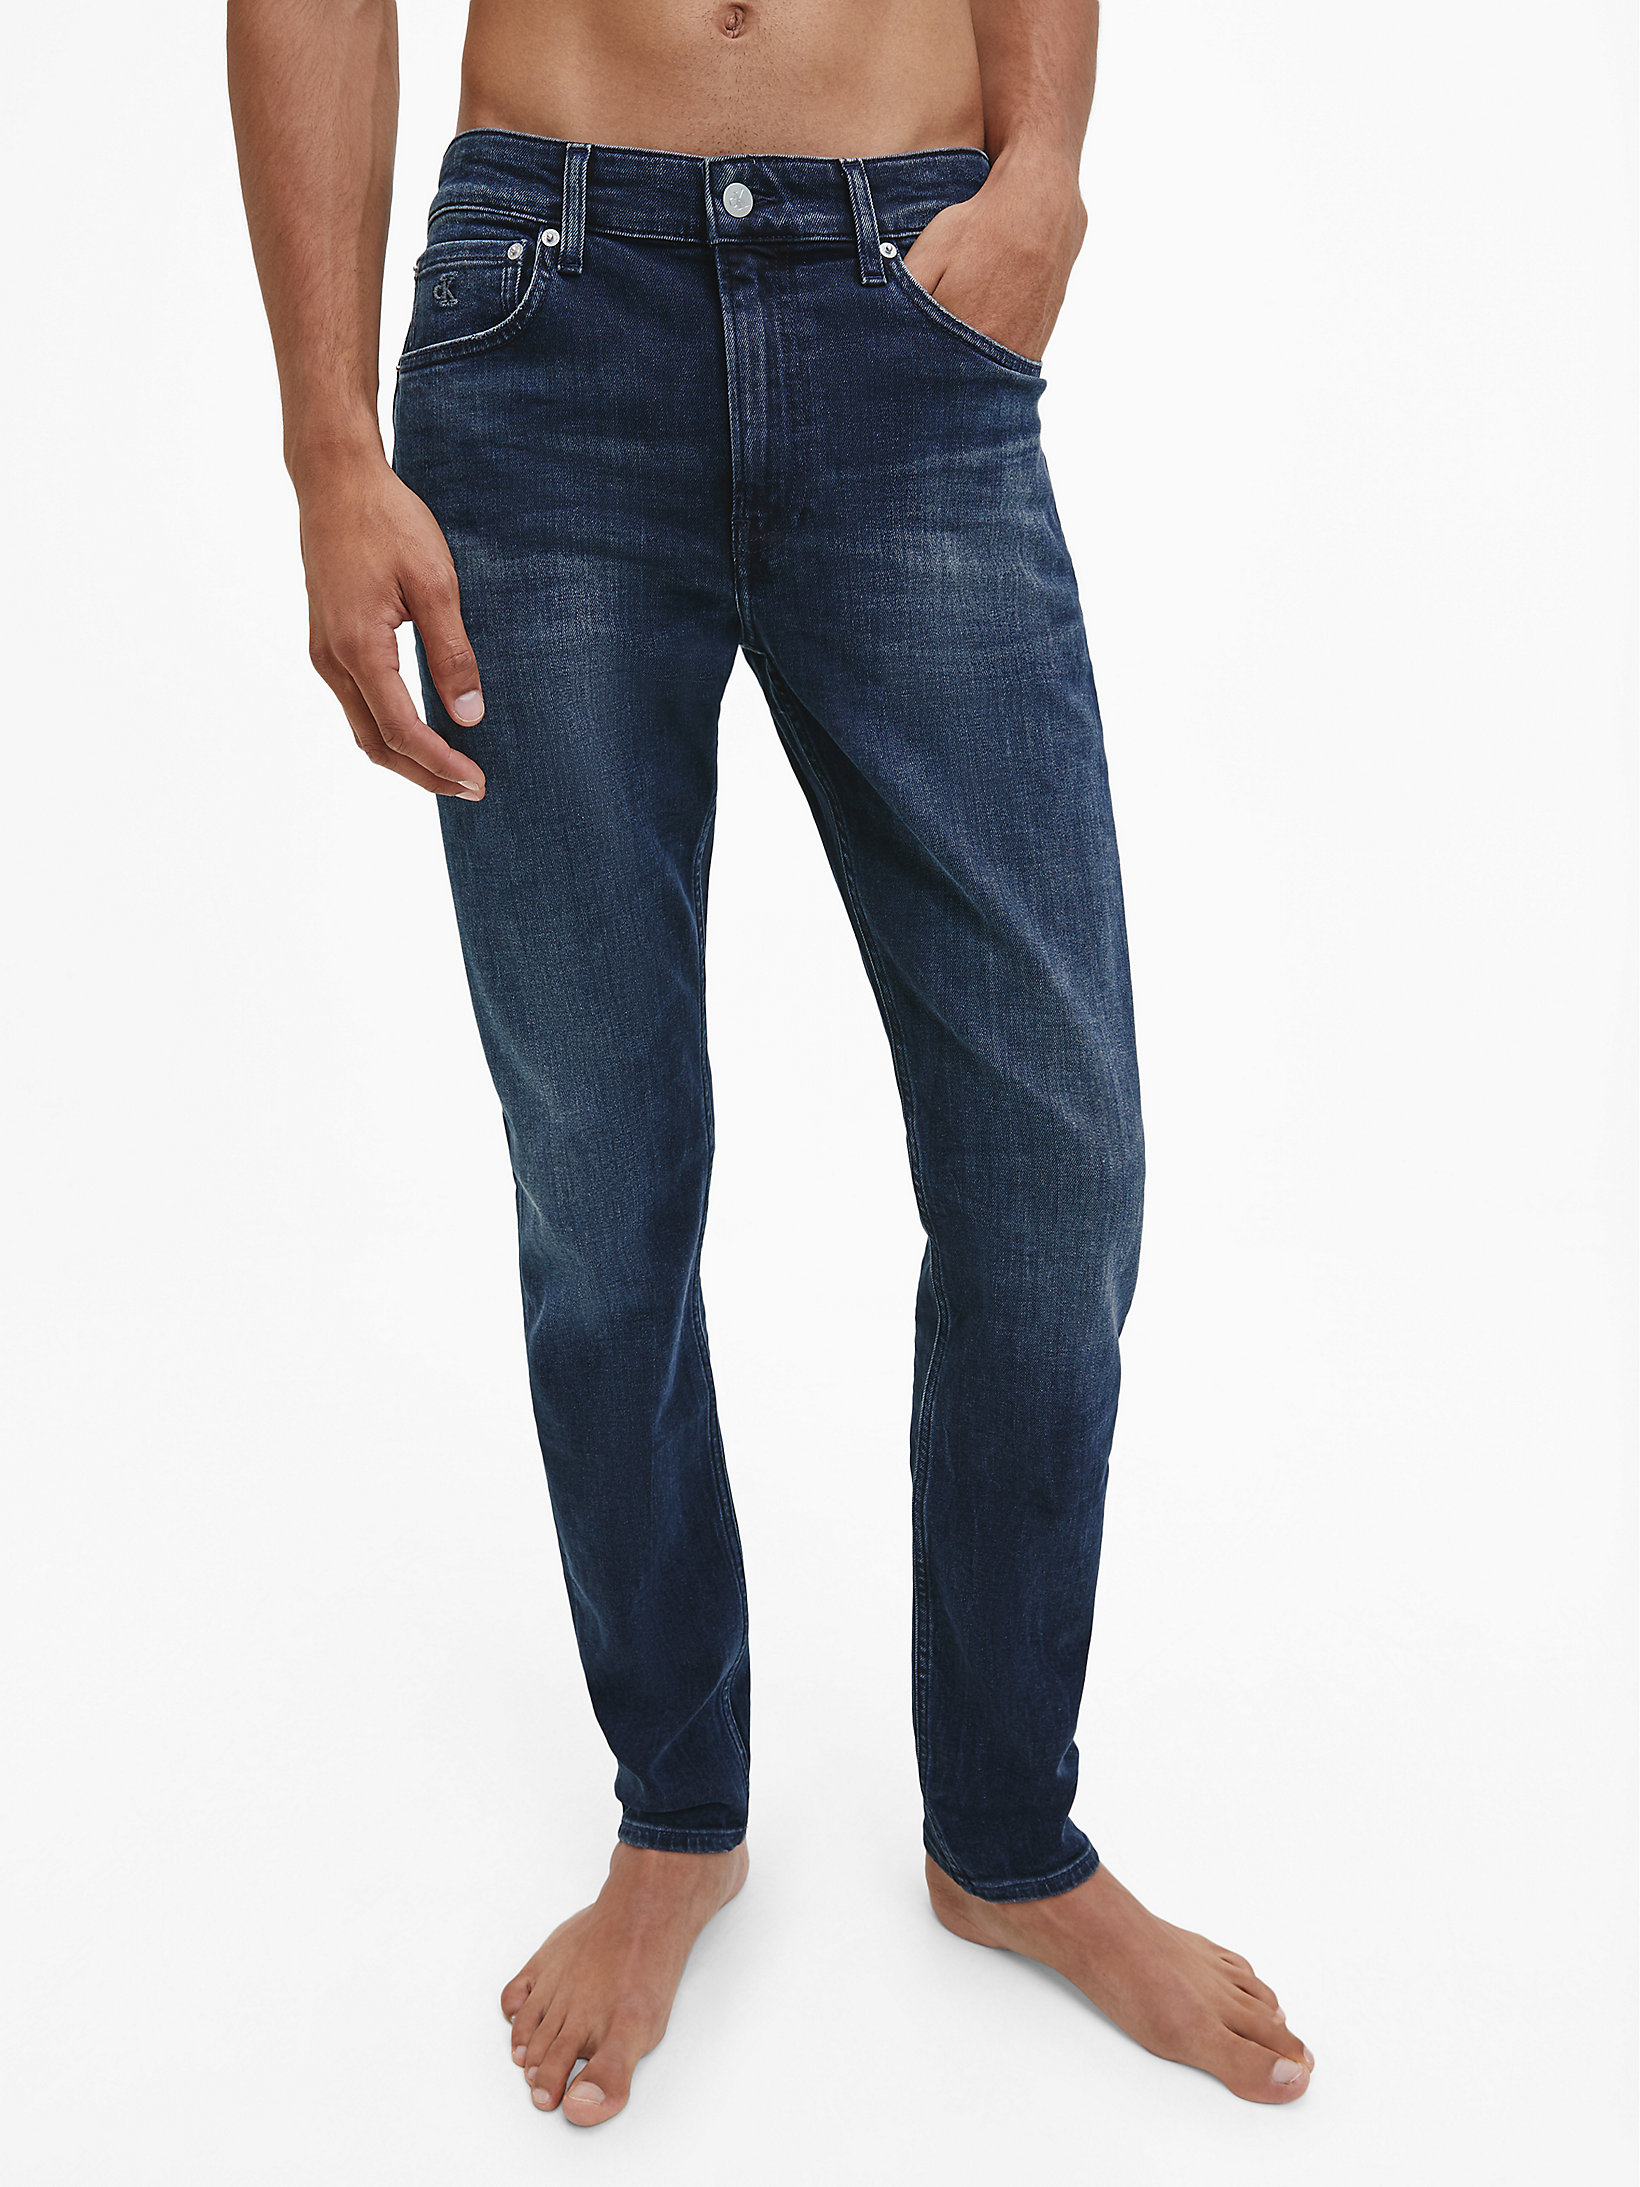 Introducir 85+ imagen calvin klein jeans slim tapered